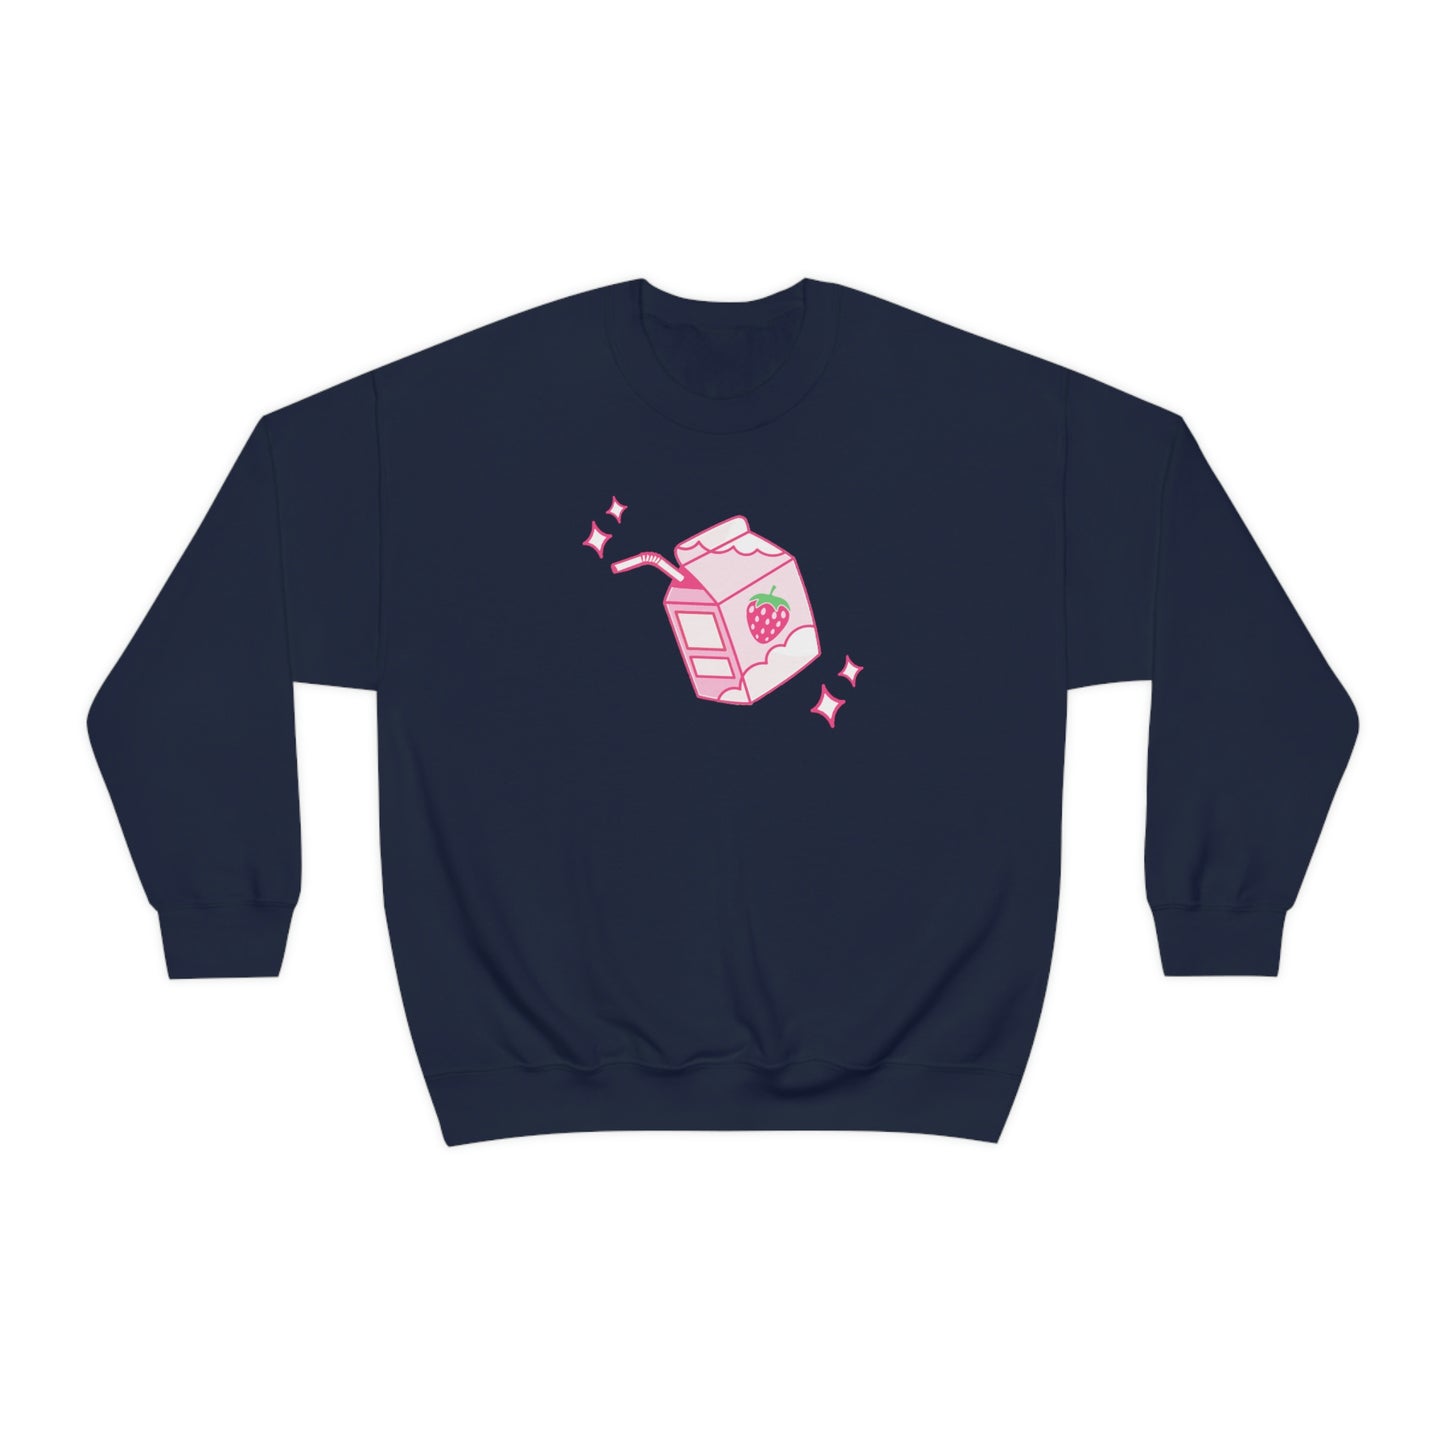 Strawberry Milk Sweatshirt Kawaii Anime Kawaii Clothing Kawaii Anime Japanese Hoodie Harajuku Clothing Aesthetic Cute Gift